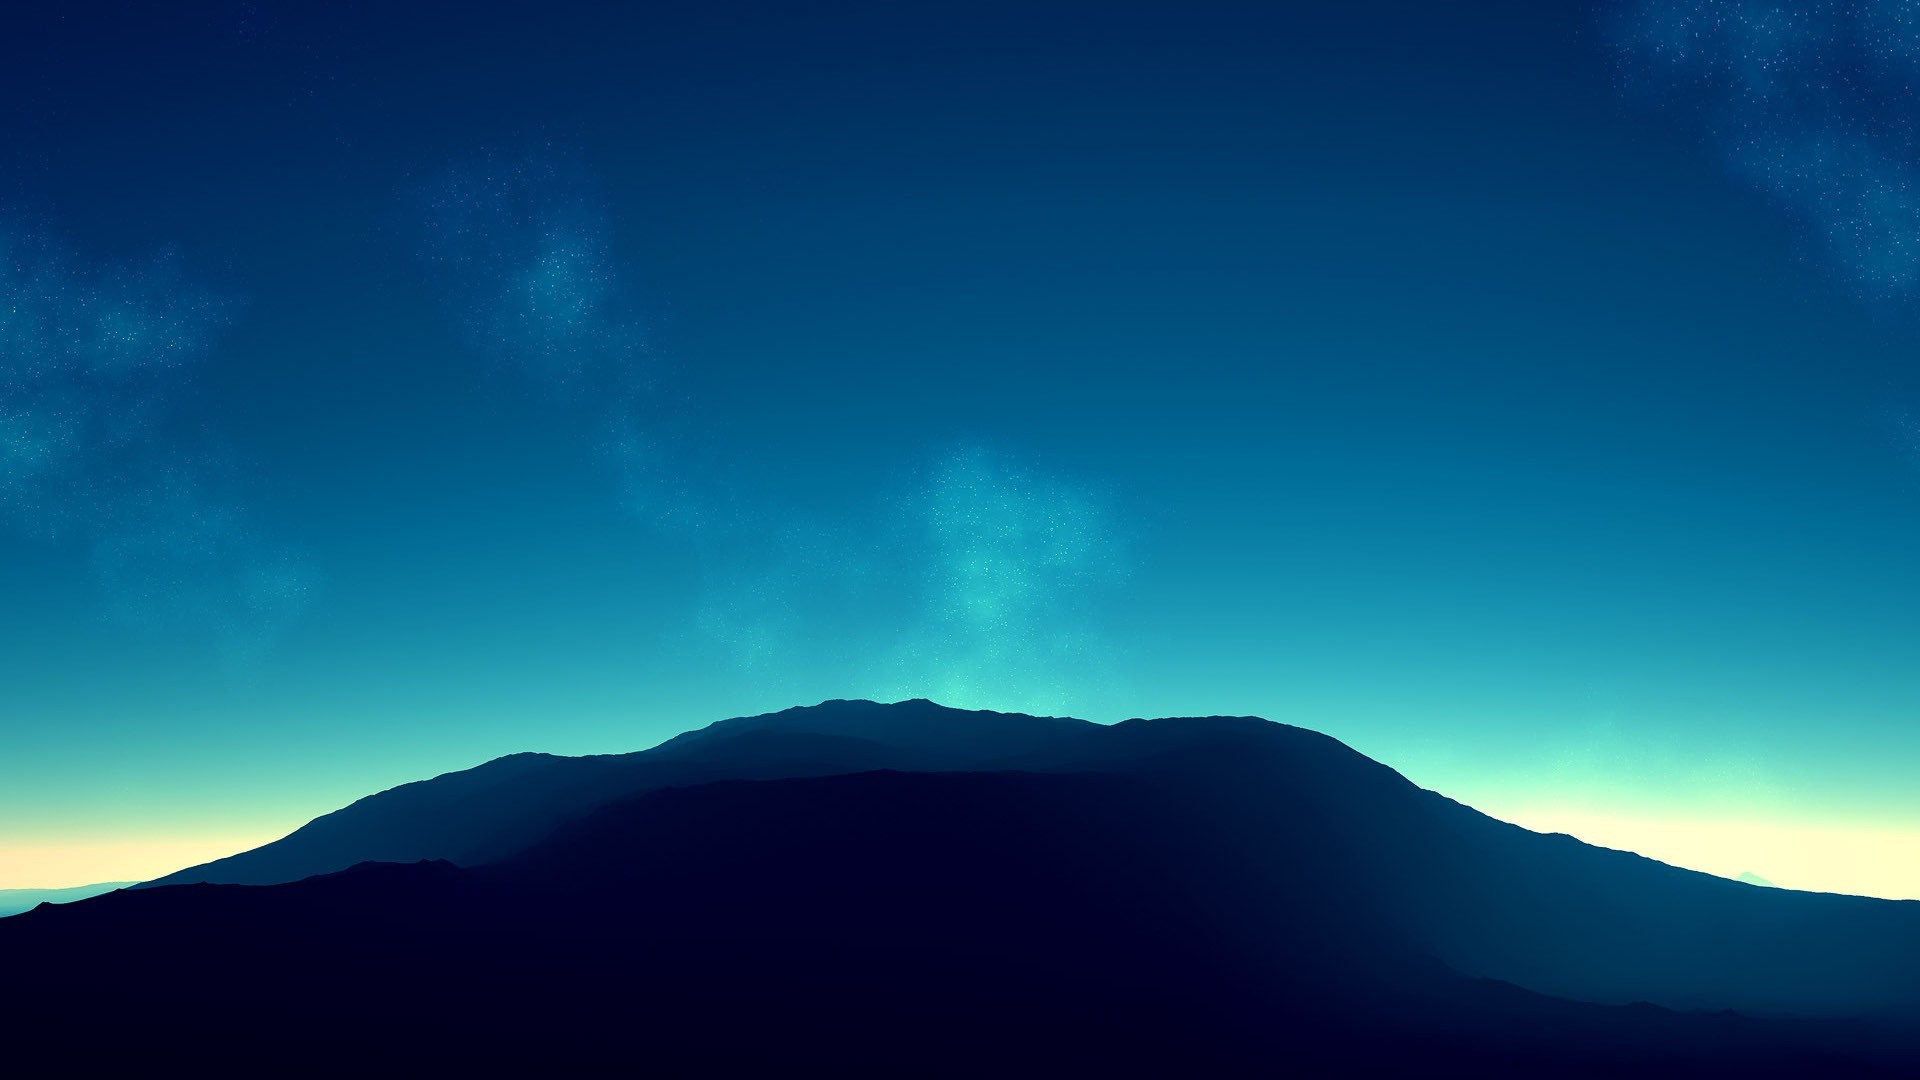 General 1920x1080 simple background nature mountains landscape sky stars minimalism cyan blue